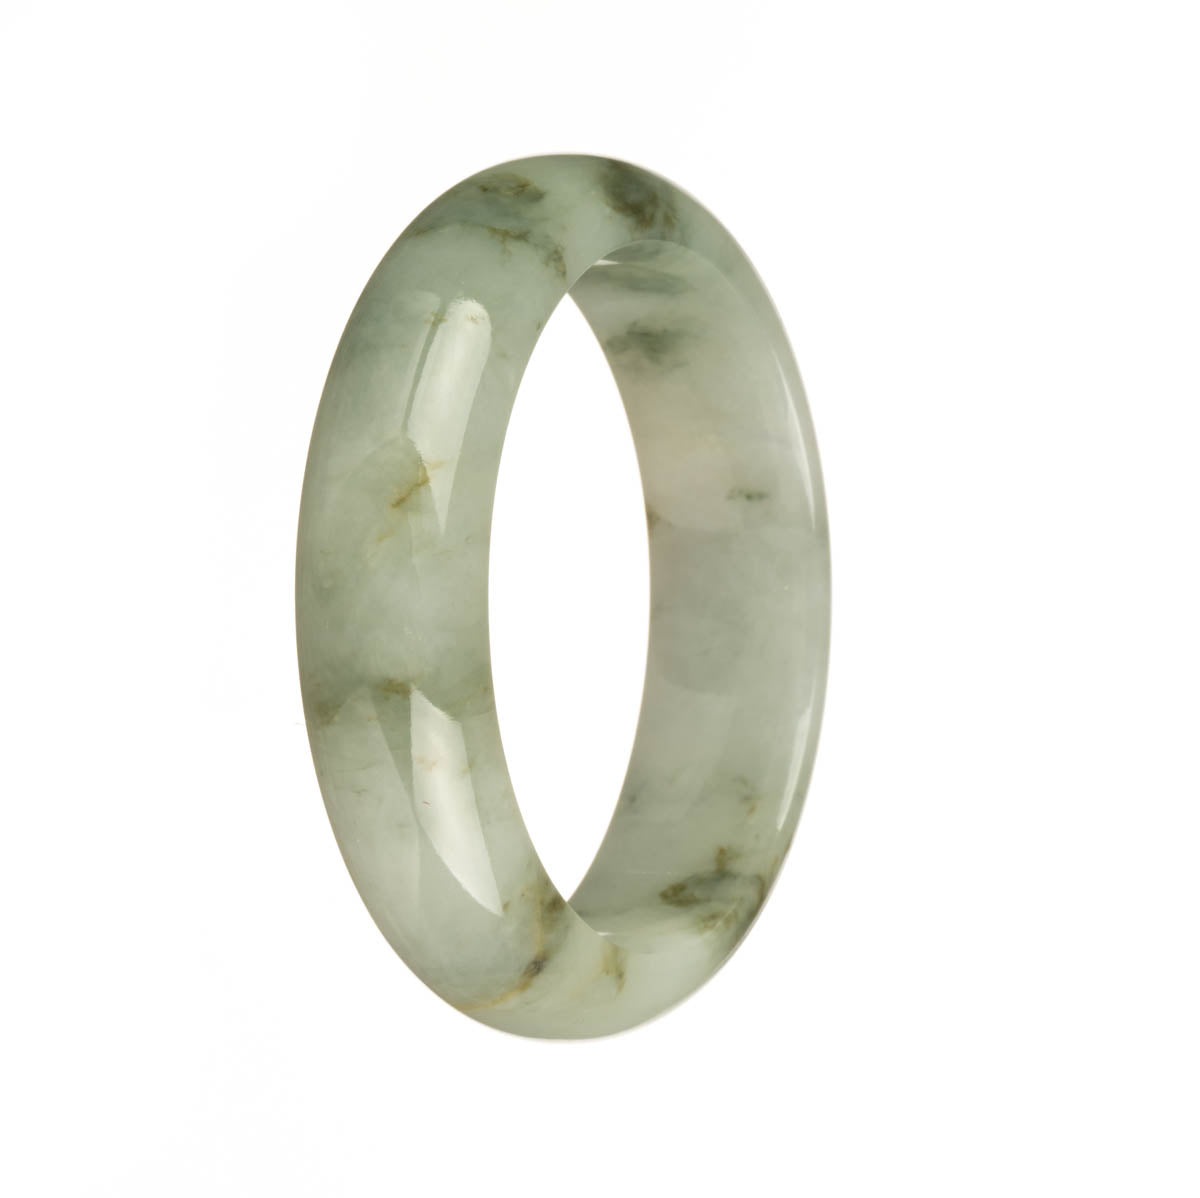 Certified Grade A White with Olive Green Pattern Jadeite Jade Bangle Bracelet - 55mm Half Moon